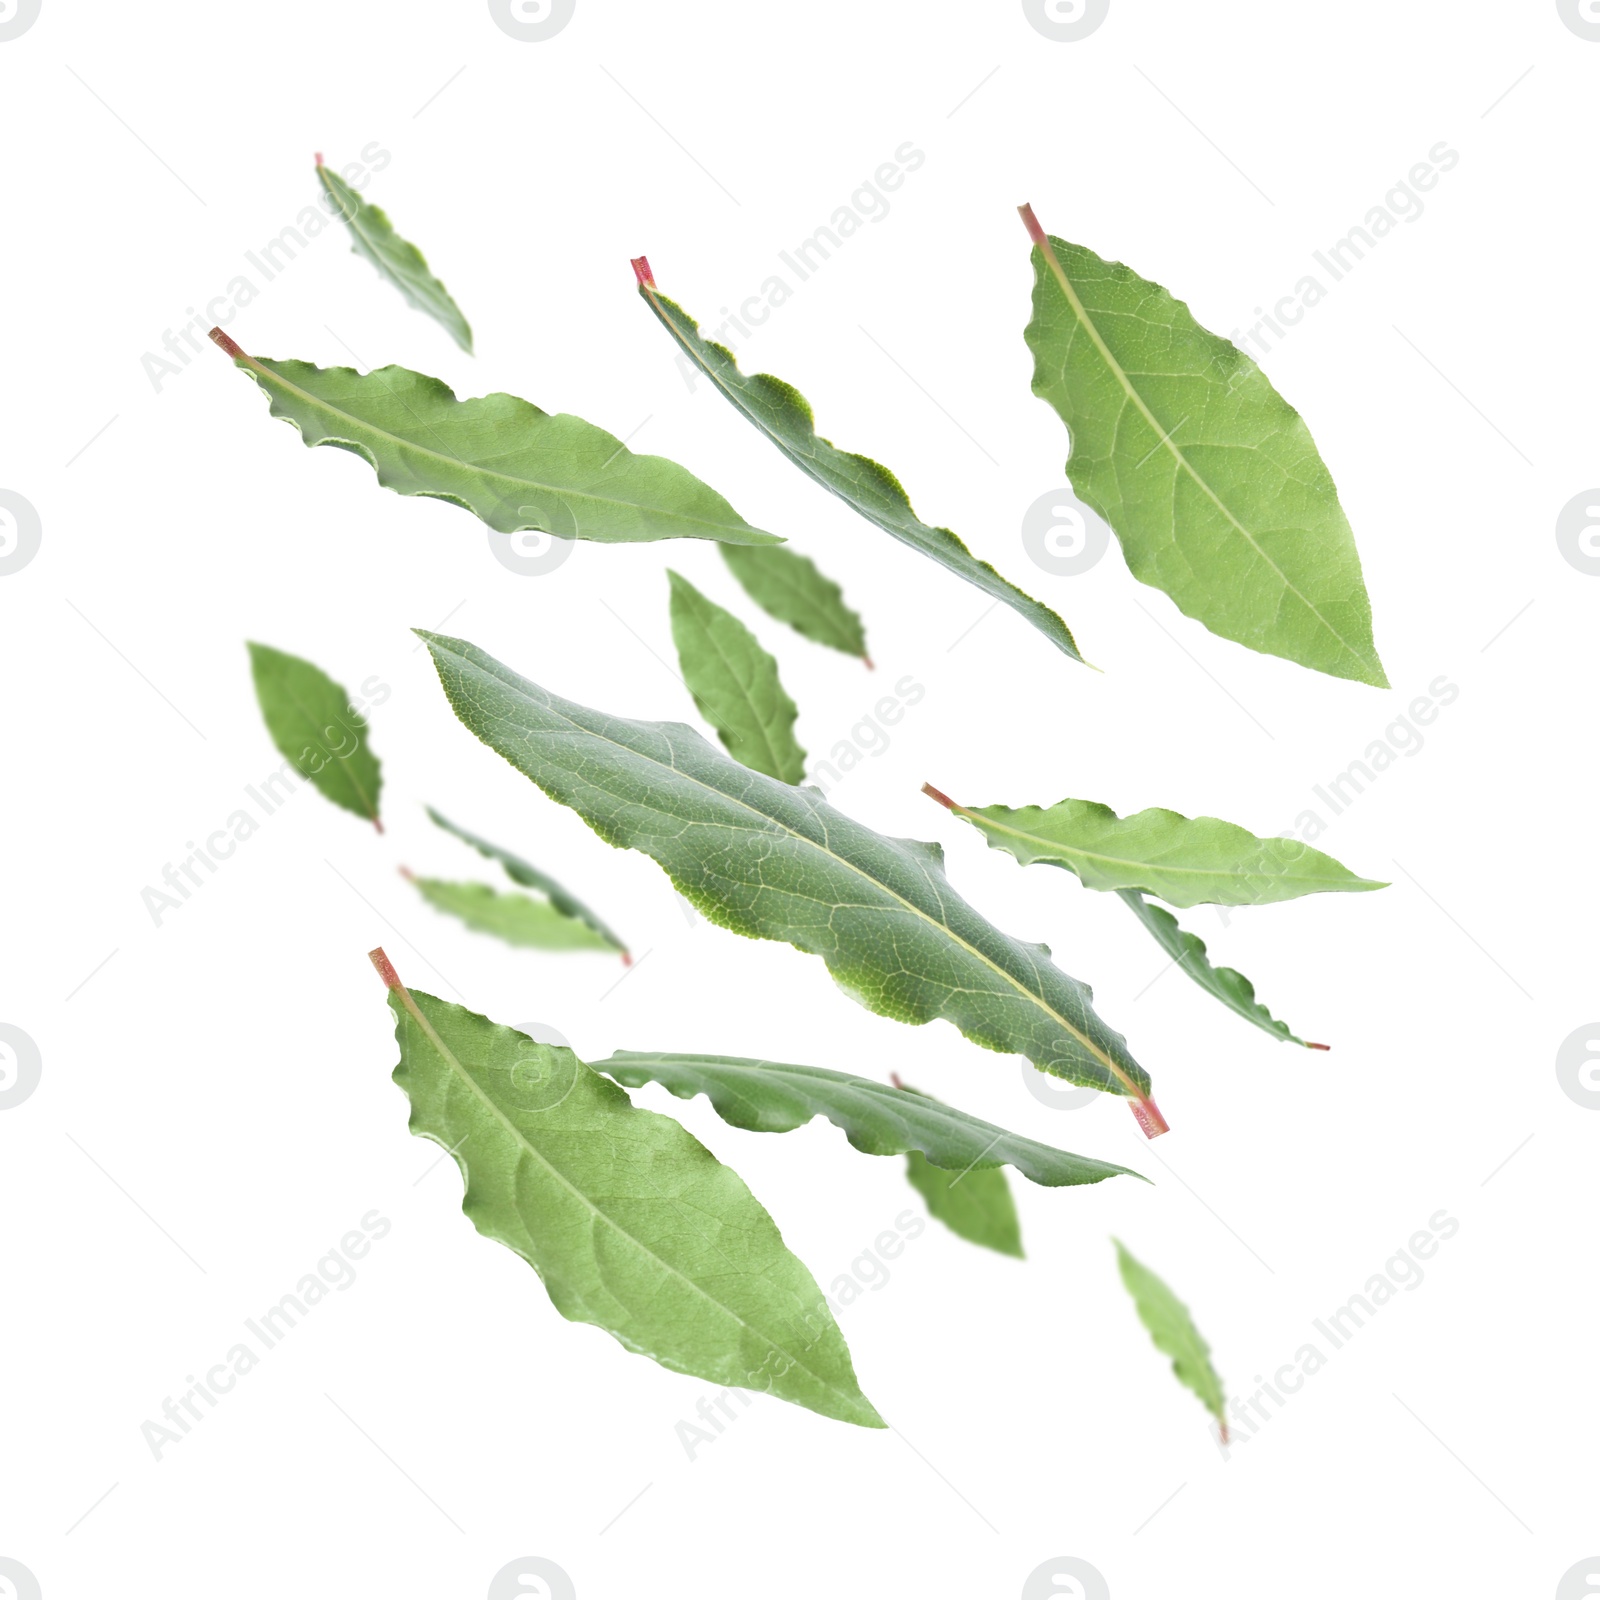 Image of Fresh bay leaves falling on white background